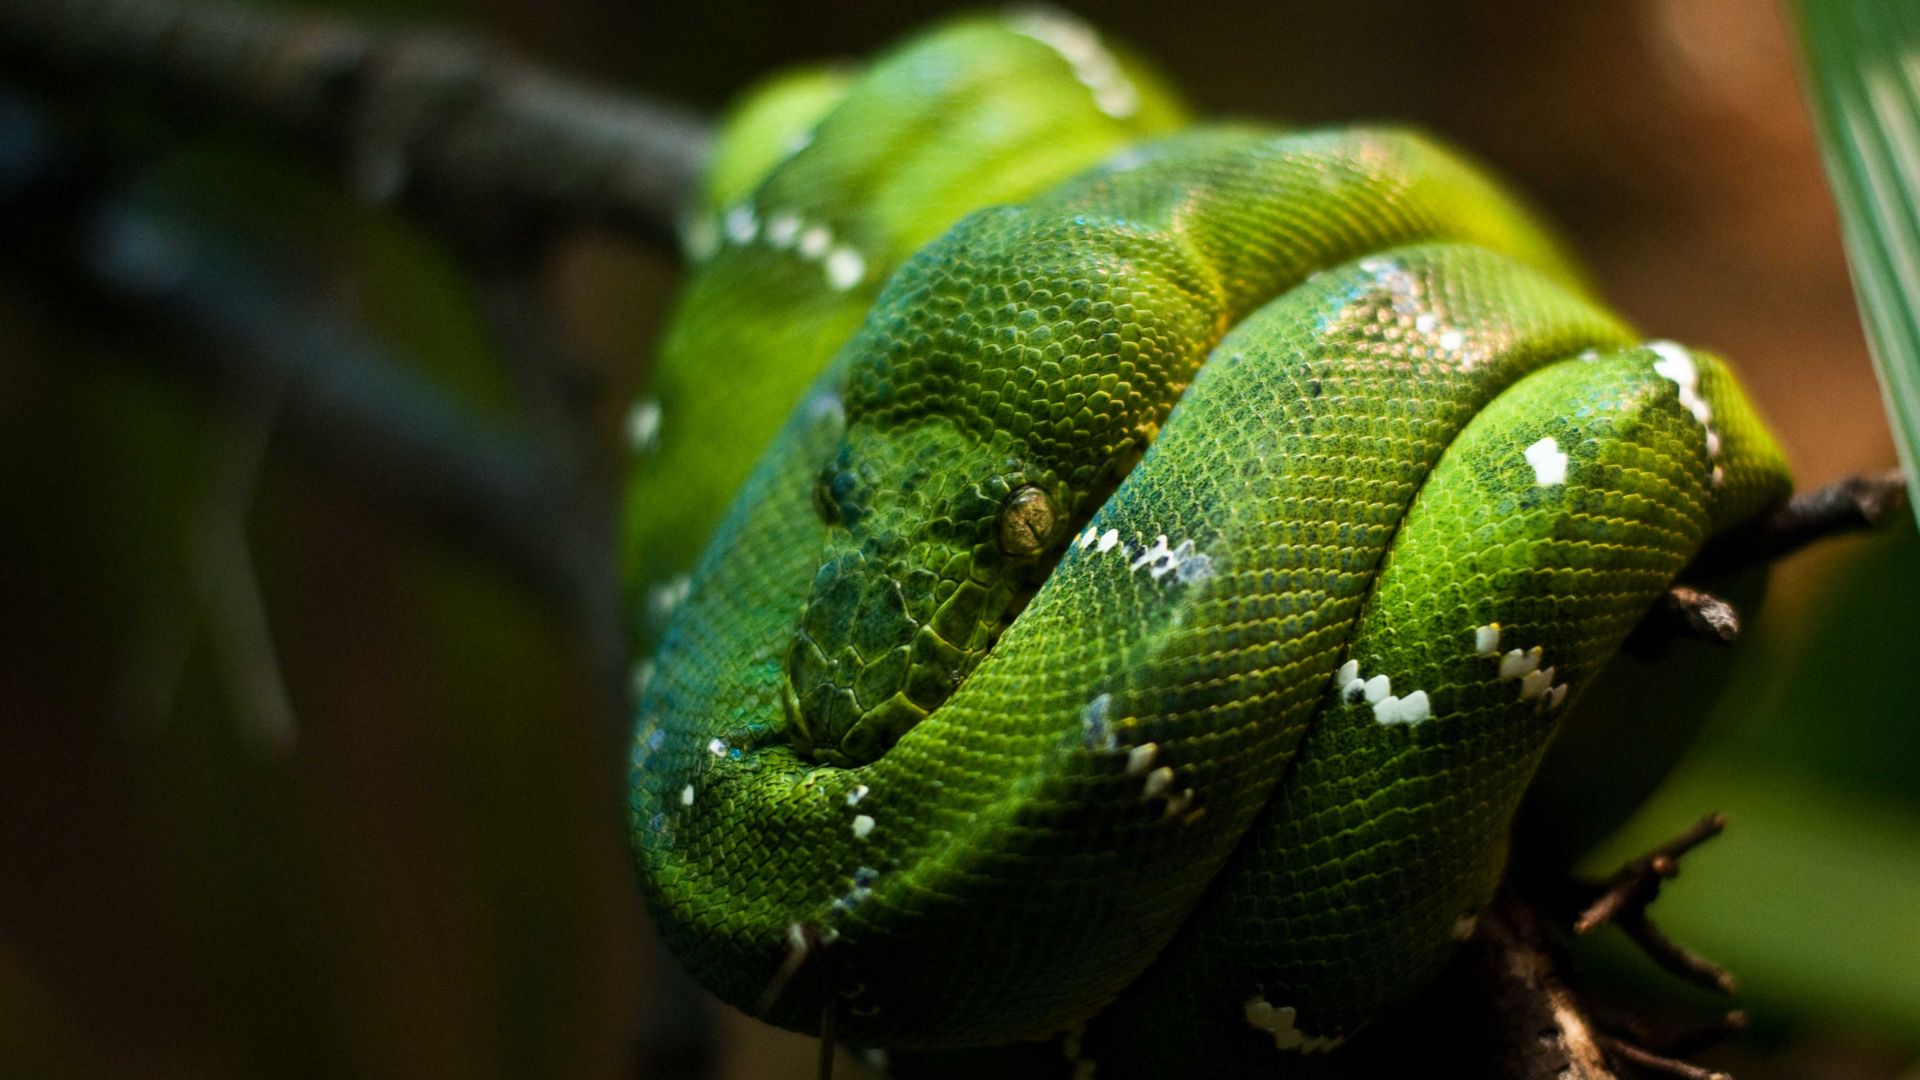 Питон, зеленый, Сингапур, змеи, глаза, Python, Singapore, zoo, Emerald, Green, snake, eyes, close-up (horizontal)